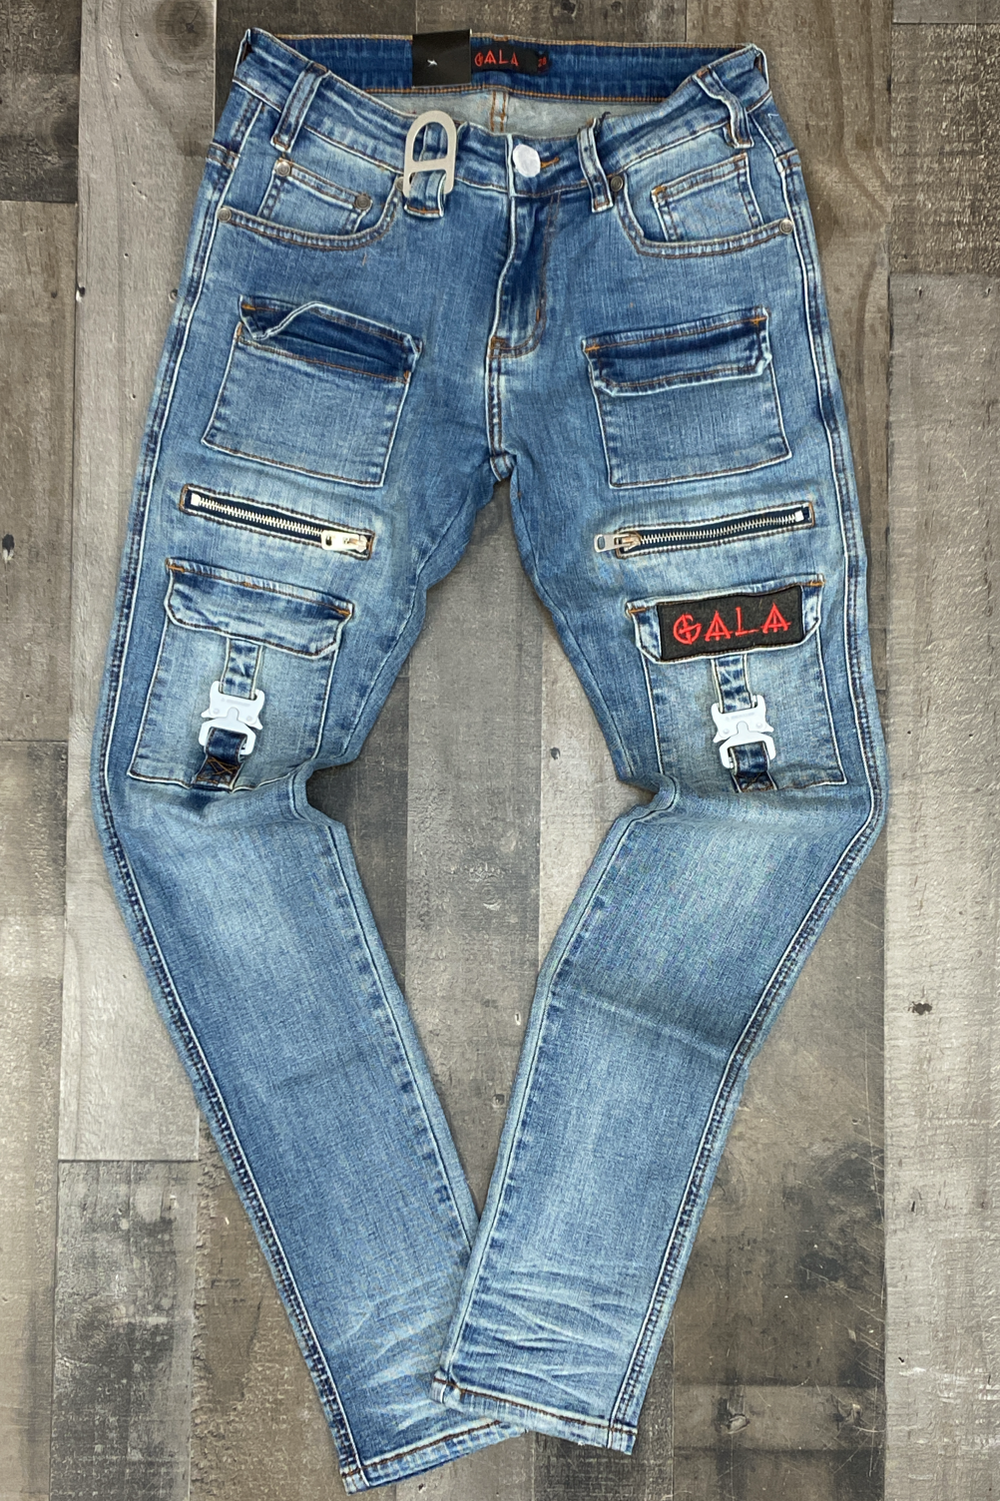 Gala- Stash stone wash jeans